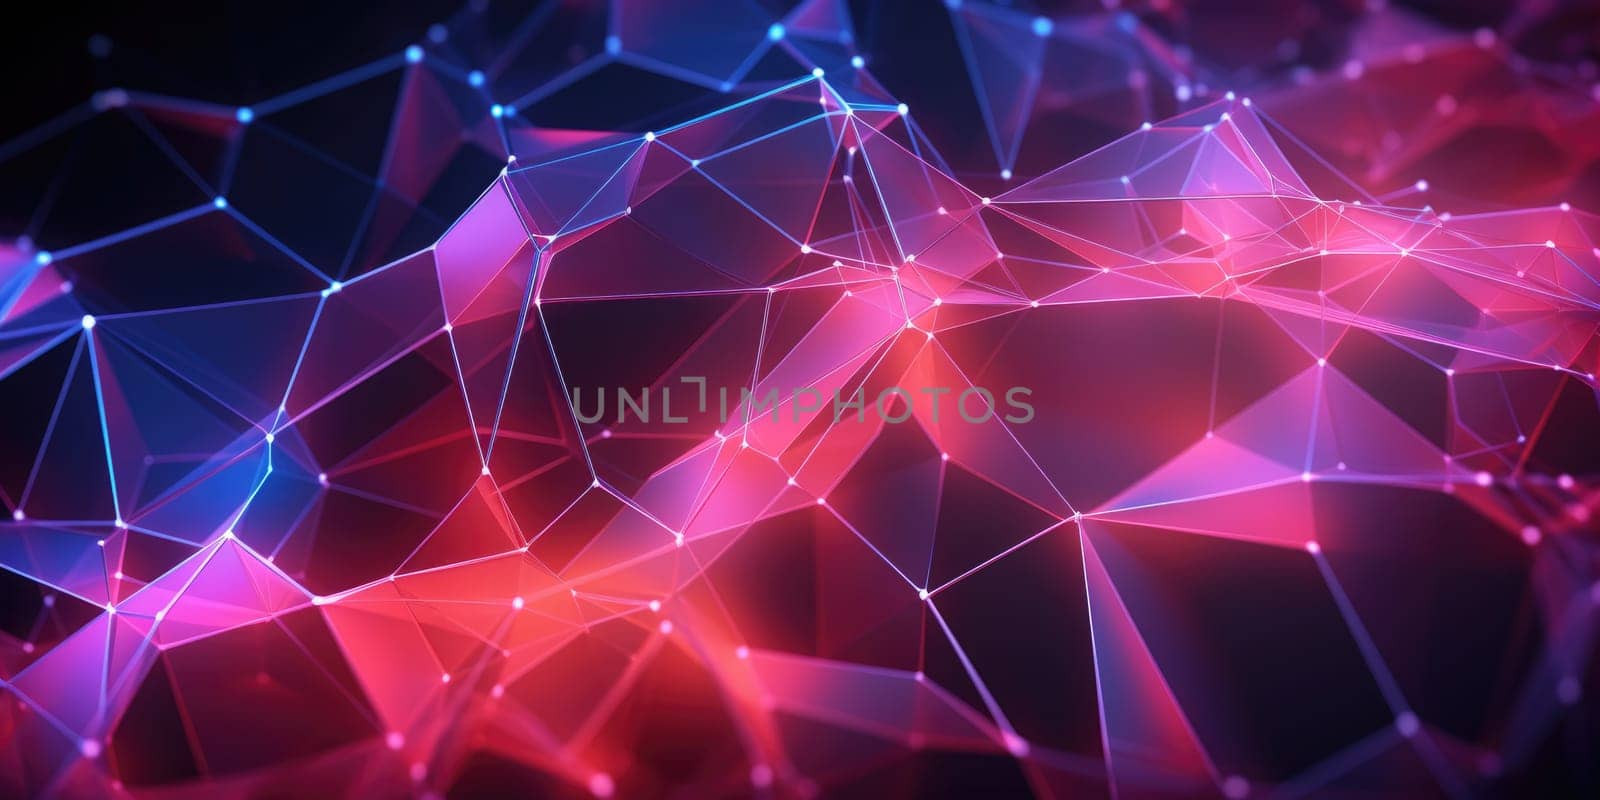 3D network connections with plexus design cyberpunk color background wallpaper. Generative AI weber. by biancoblue